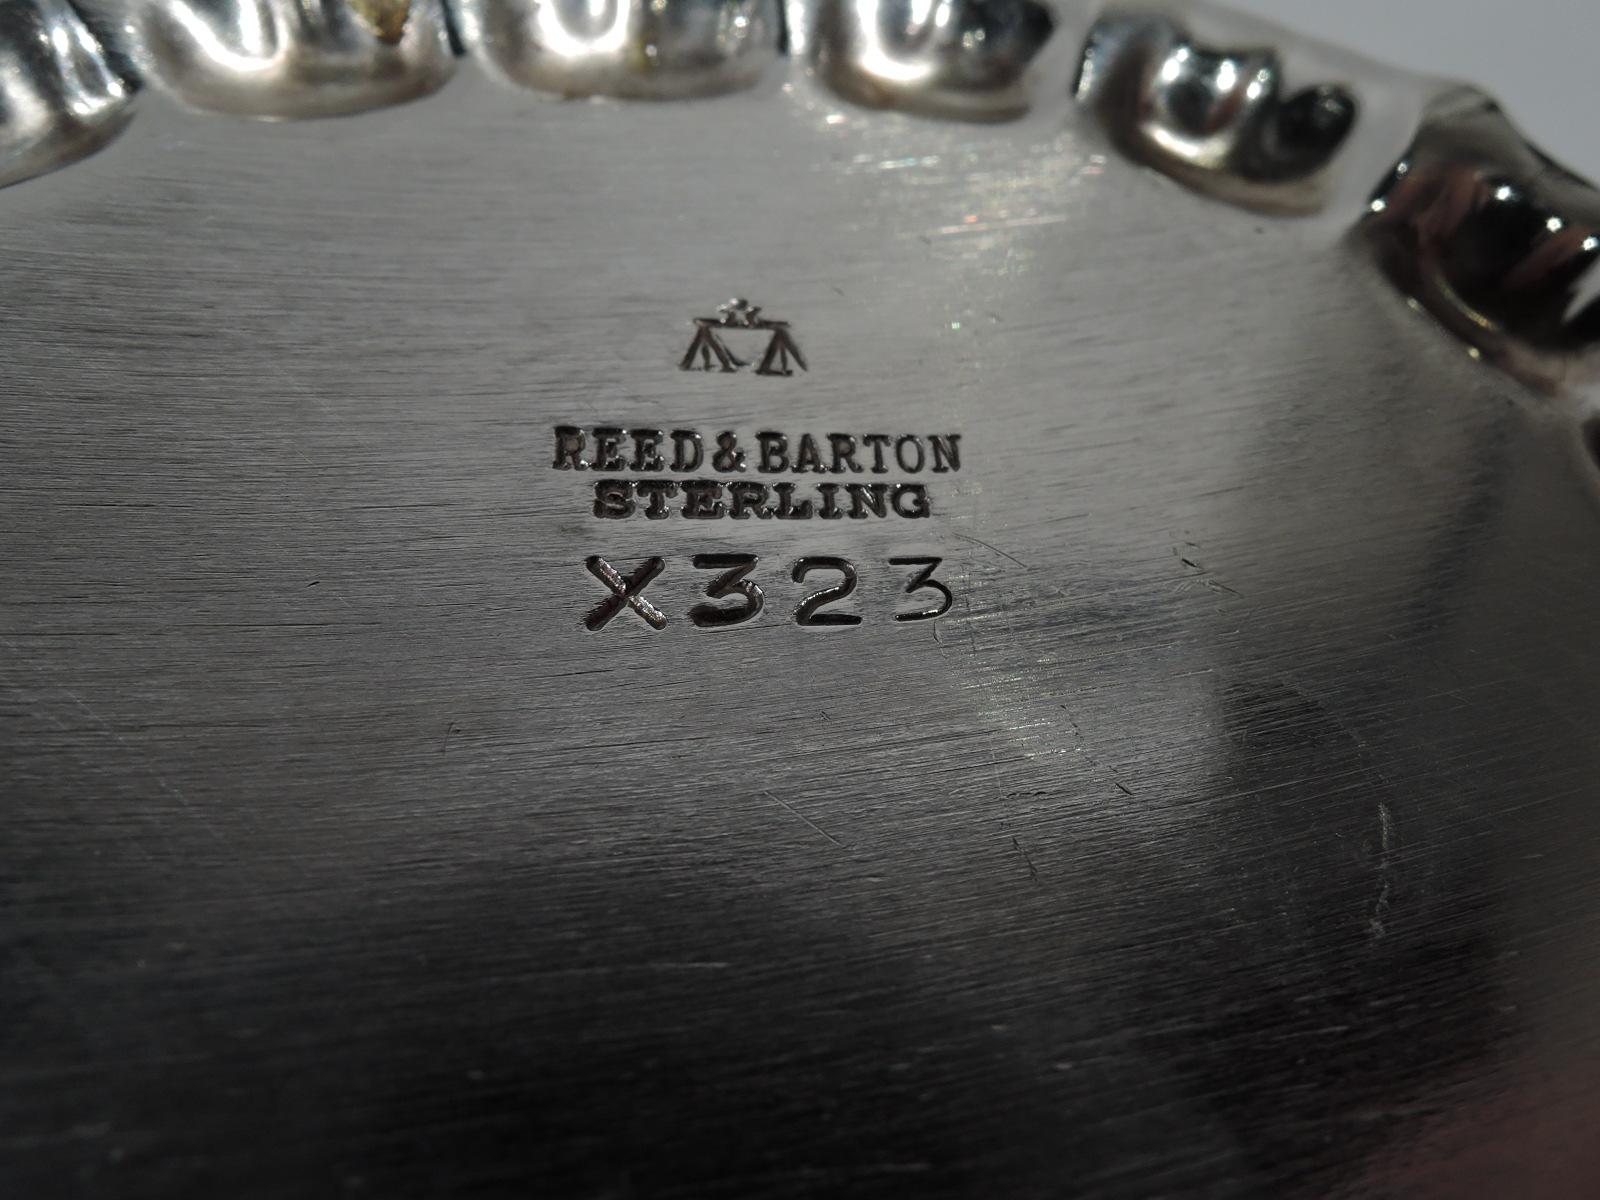 American Reed & Barton Mid-Century Modern Sterling Silver Petal Bowl